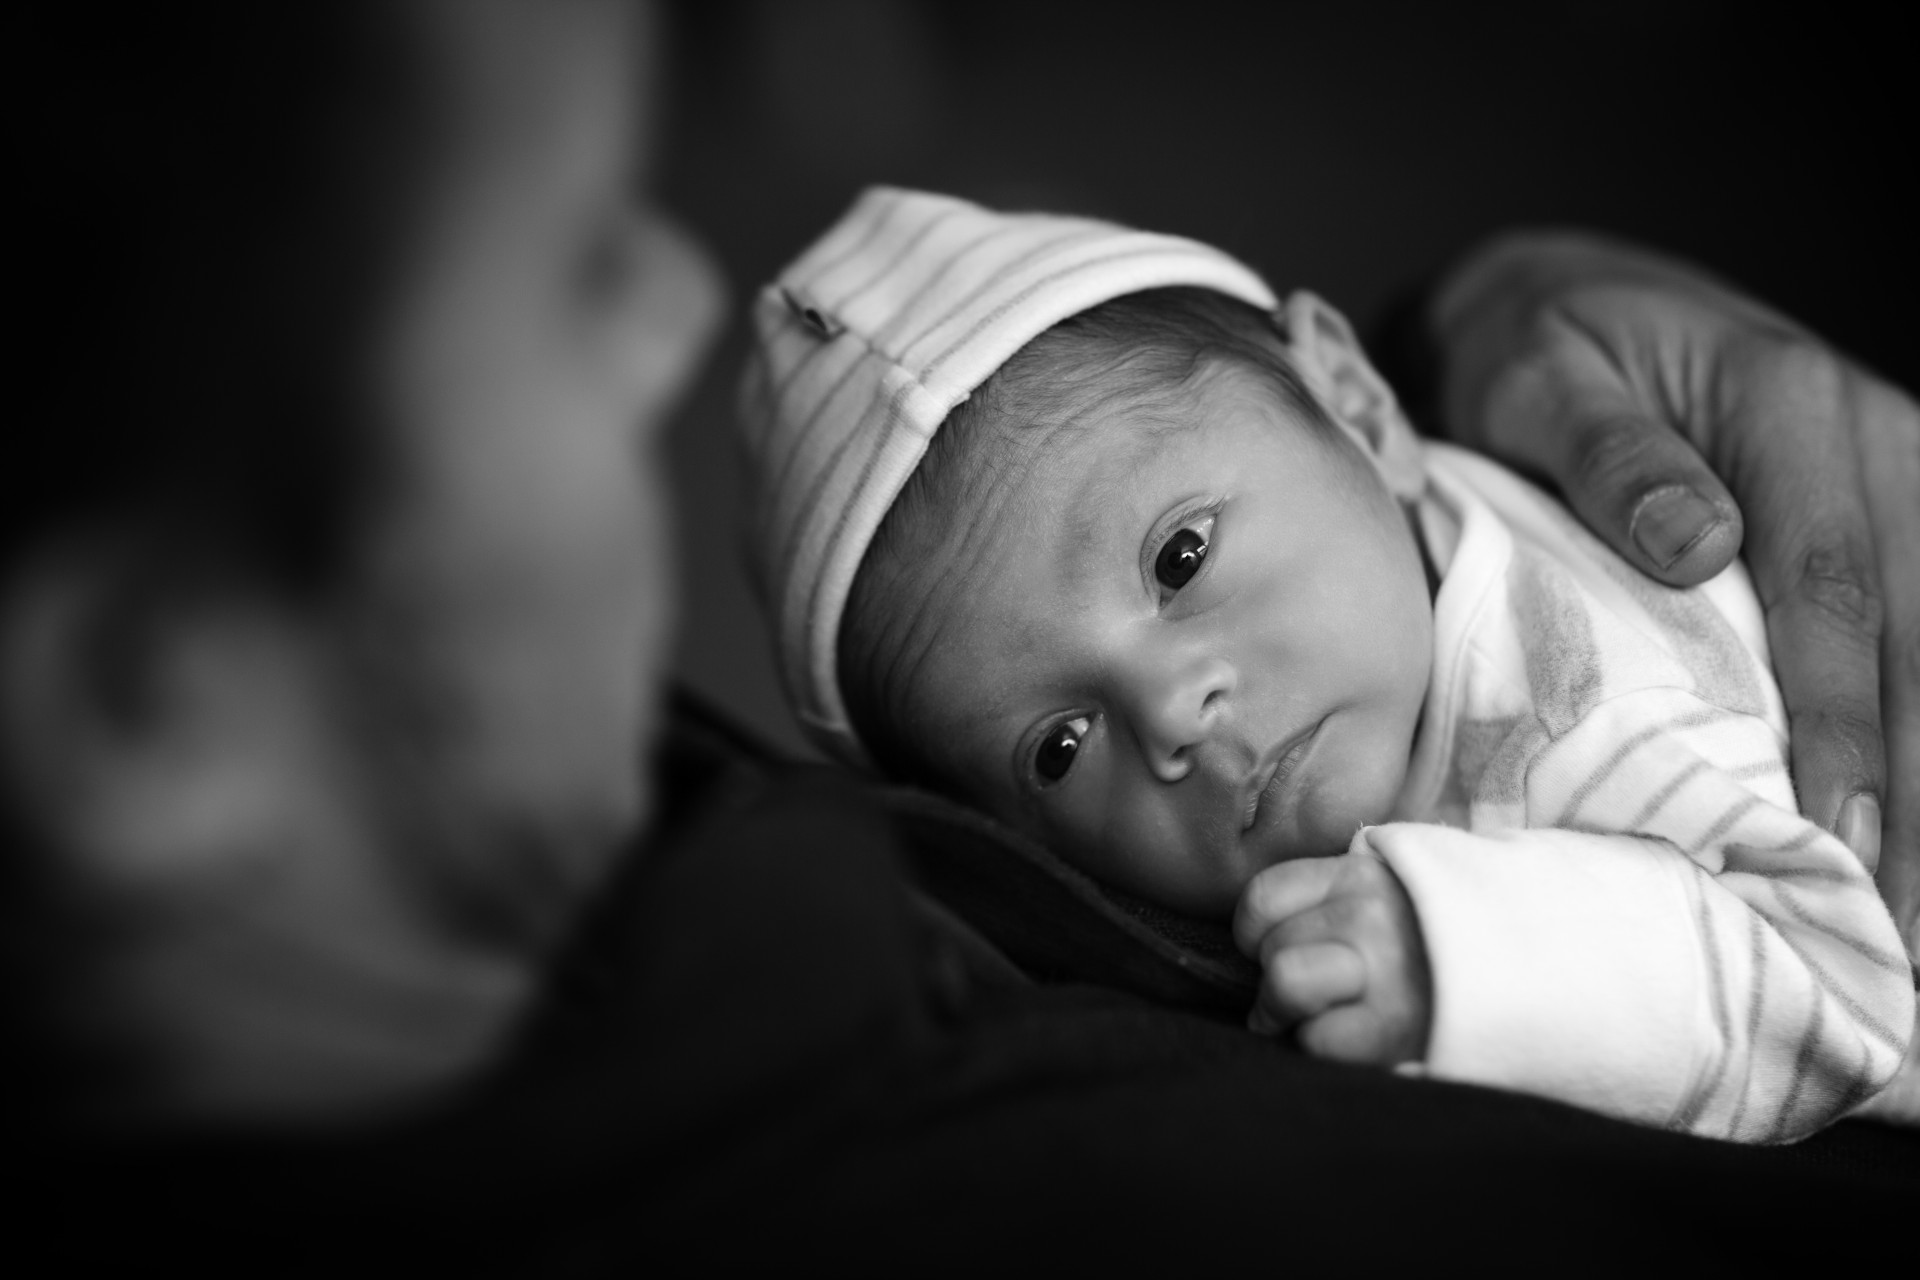 A newborn gazing up at a parent.^[[Image](https://www.publicdomainpictures.net/en/view-image.php?image=54223&picture=man-holding-newborn) is in the public domain]